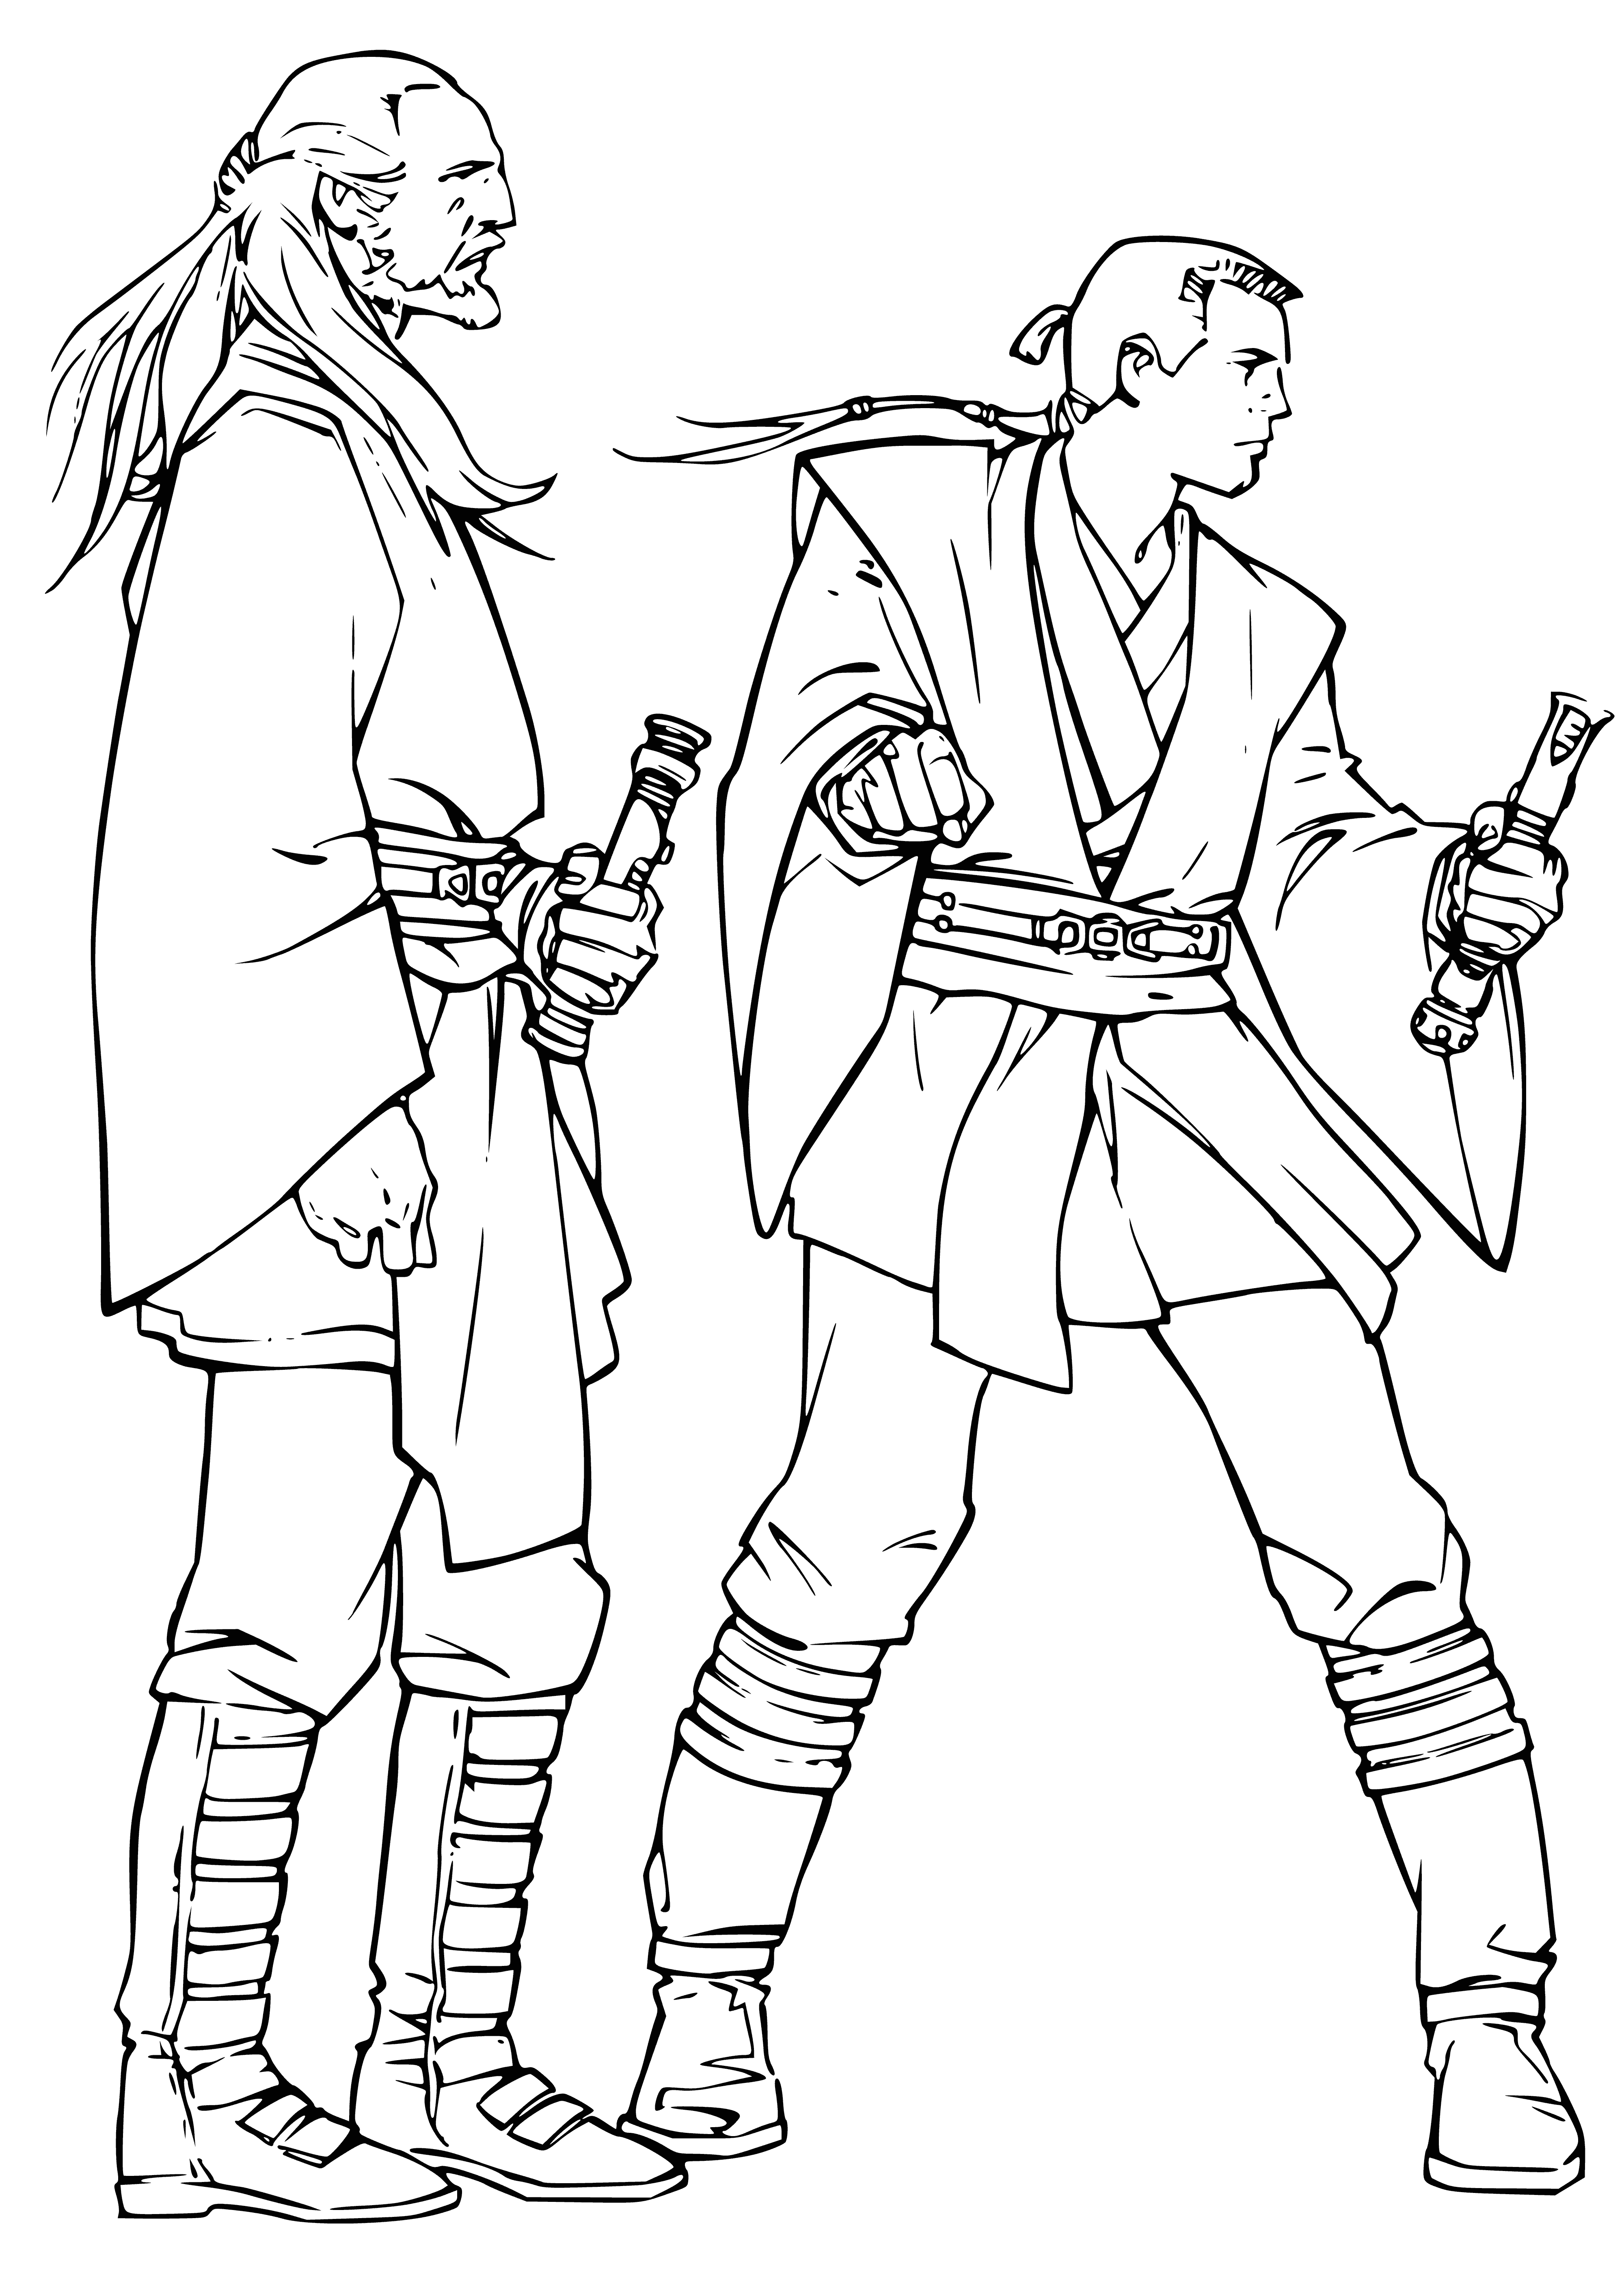 Obi-Wan Kenobi and Qui-Gon Jinn coloring page